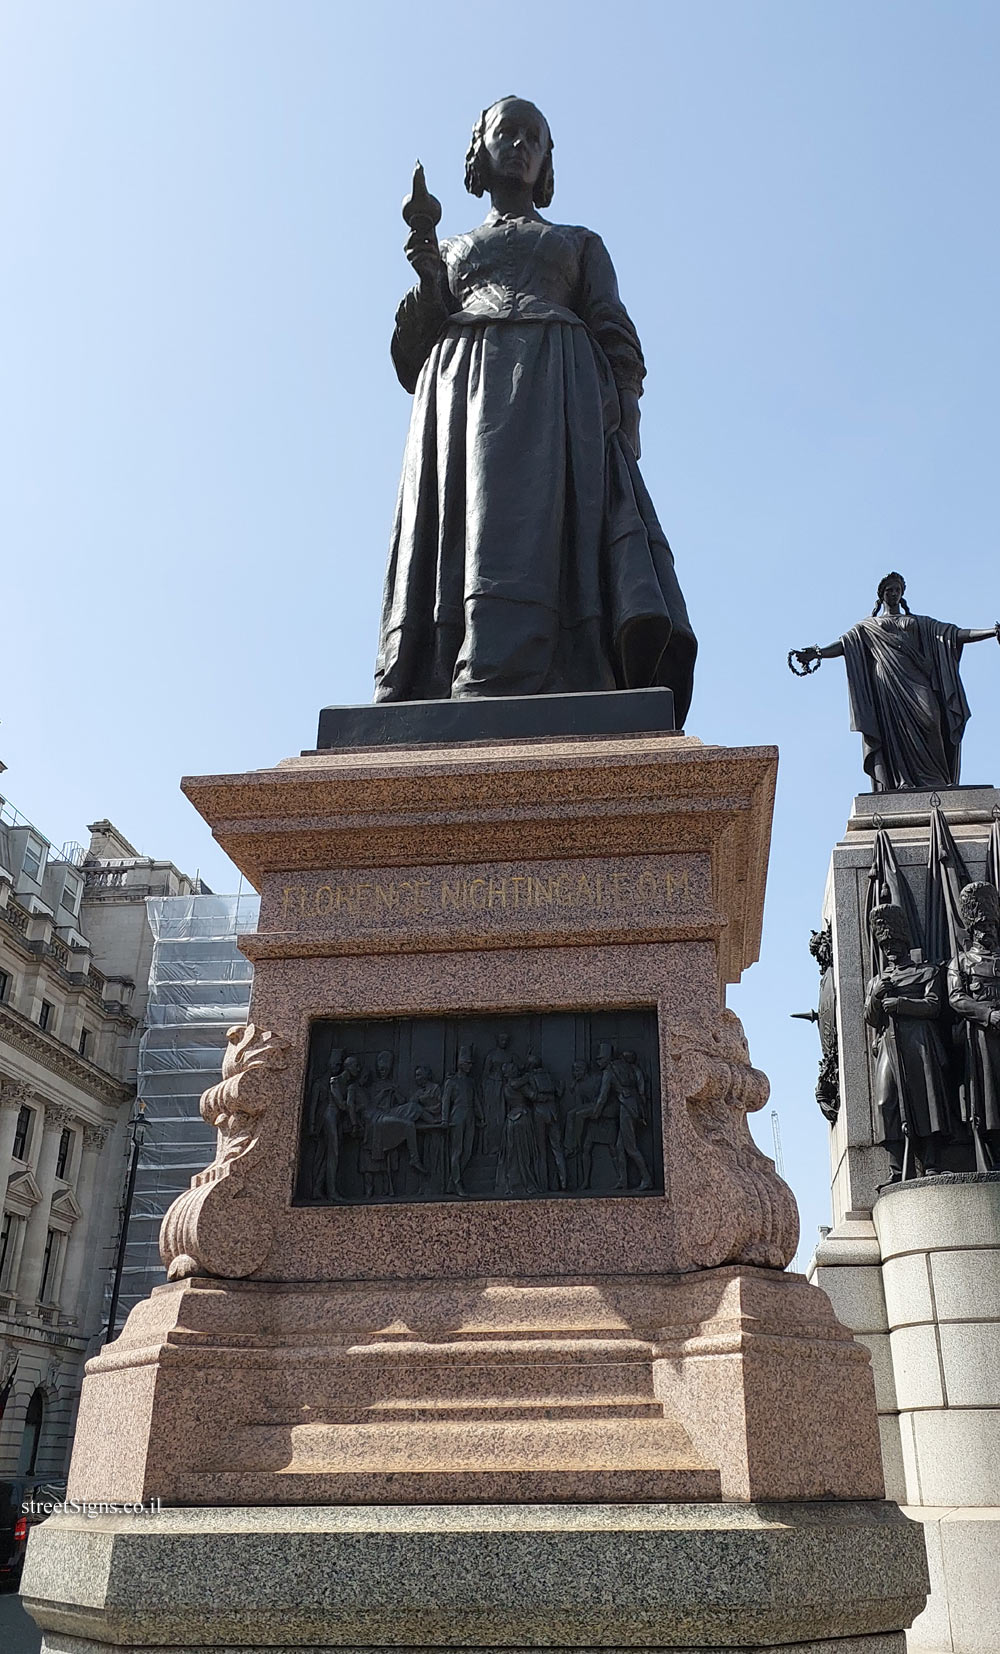 London - Statue commemorating Florence Nightingale - 17 Waterloo Pl, St. James’s, London SW1Y 4AR, UK